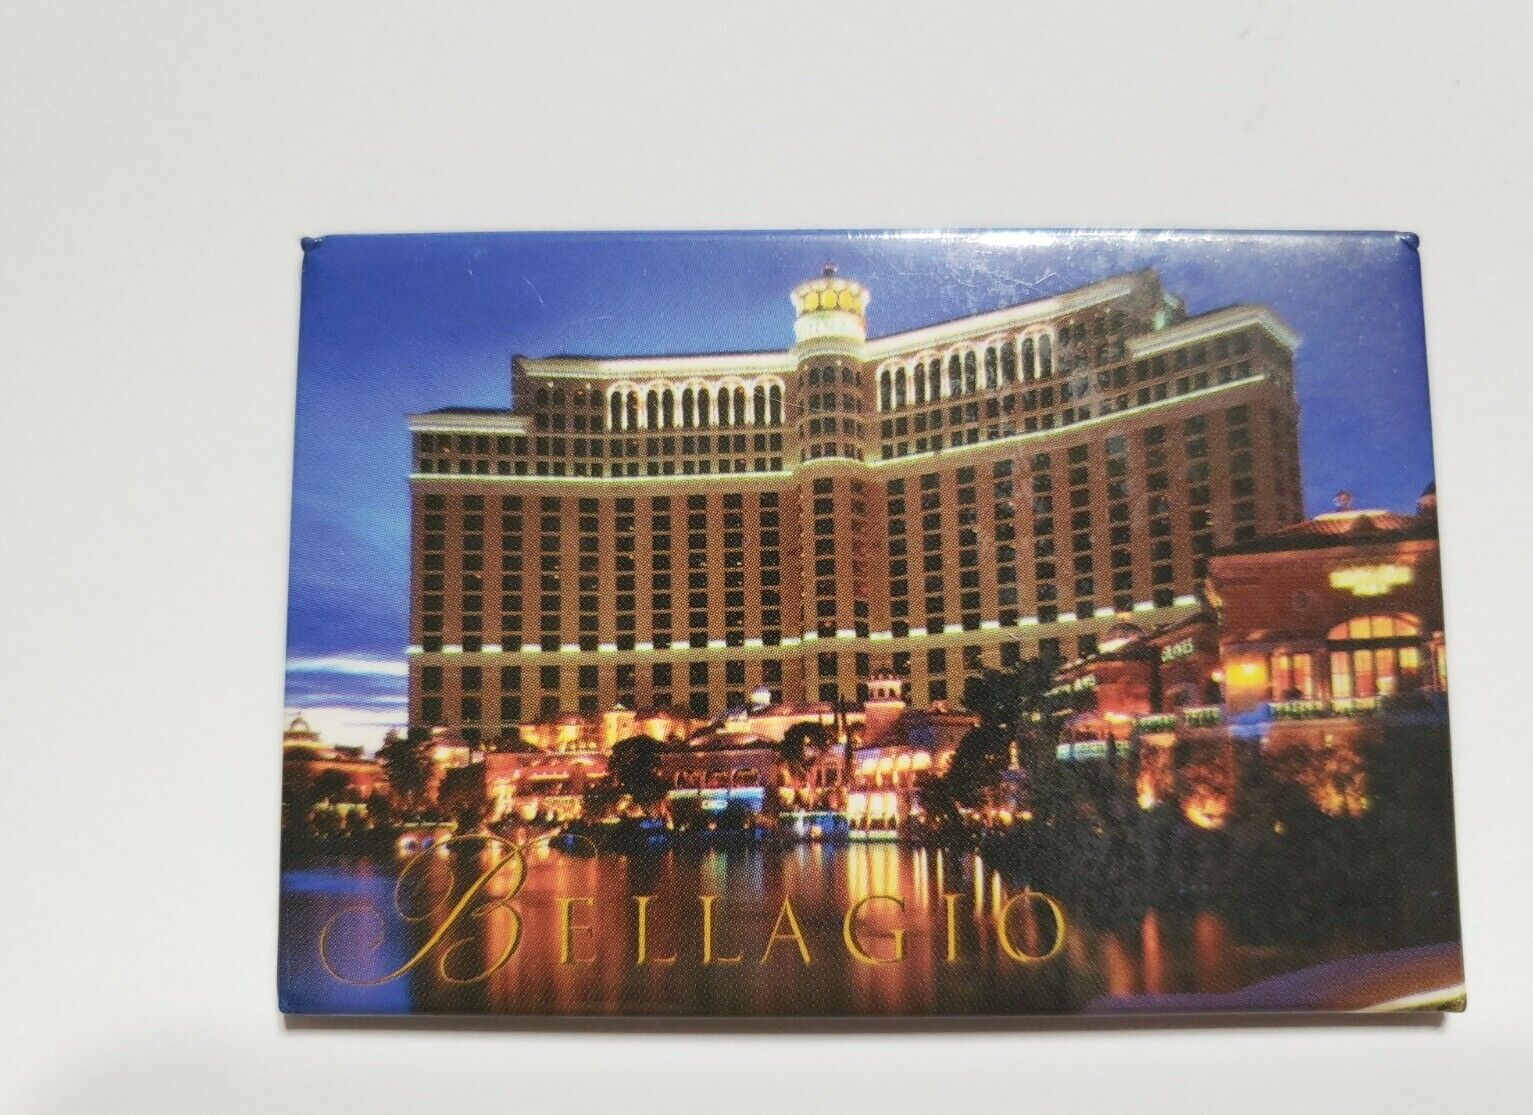 Bellagio Las Vegas Souvenir Magnet 3x2